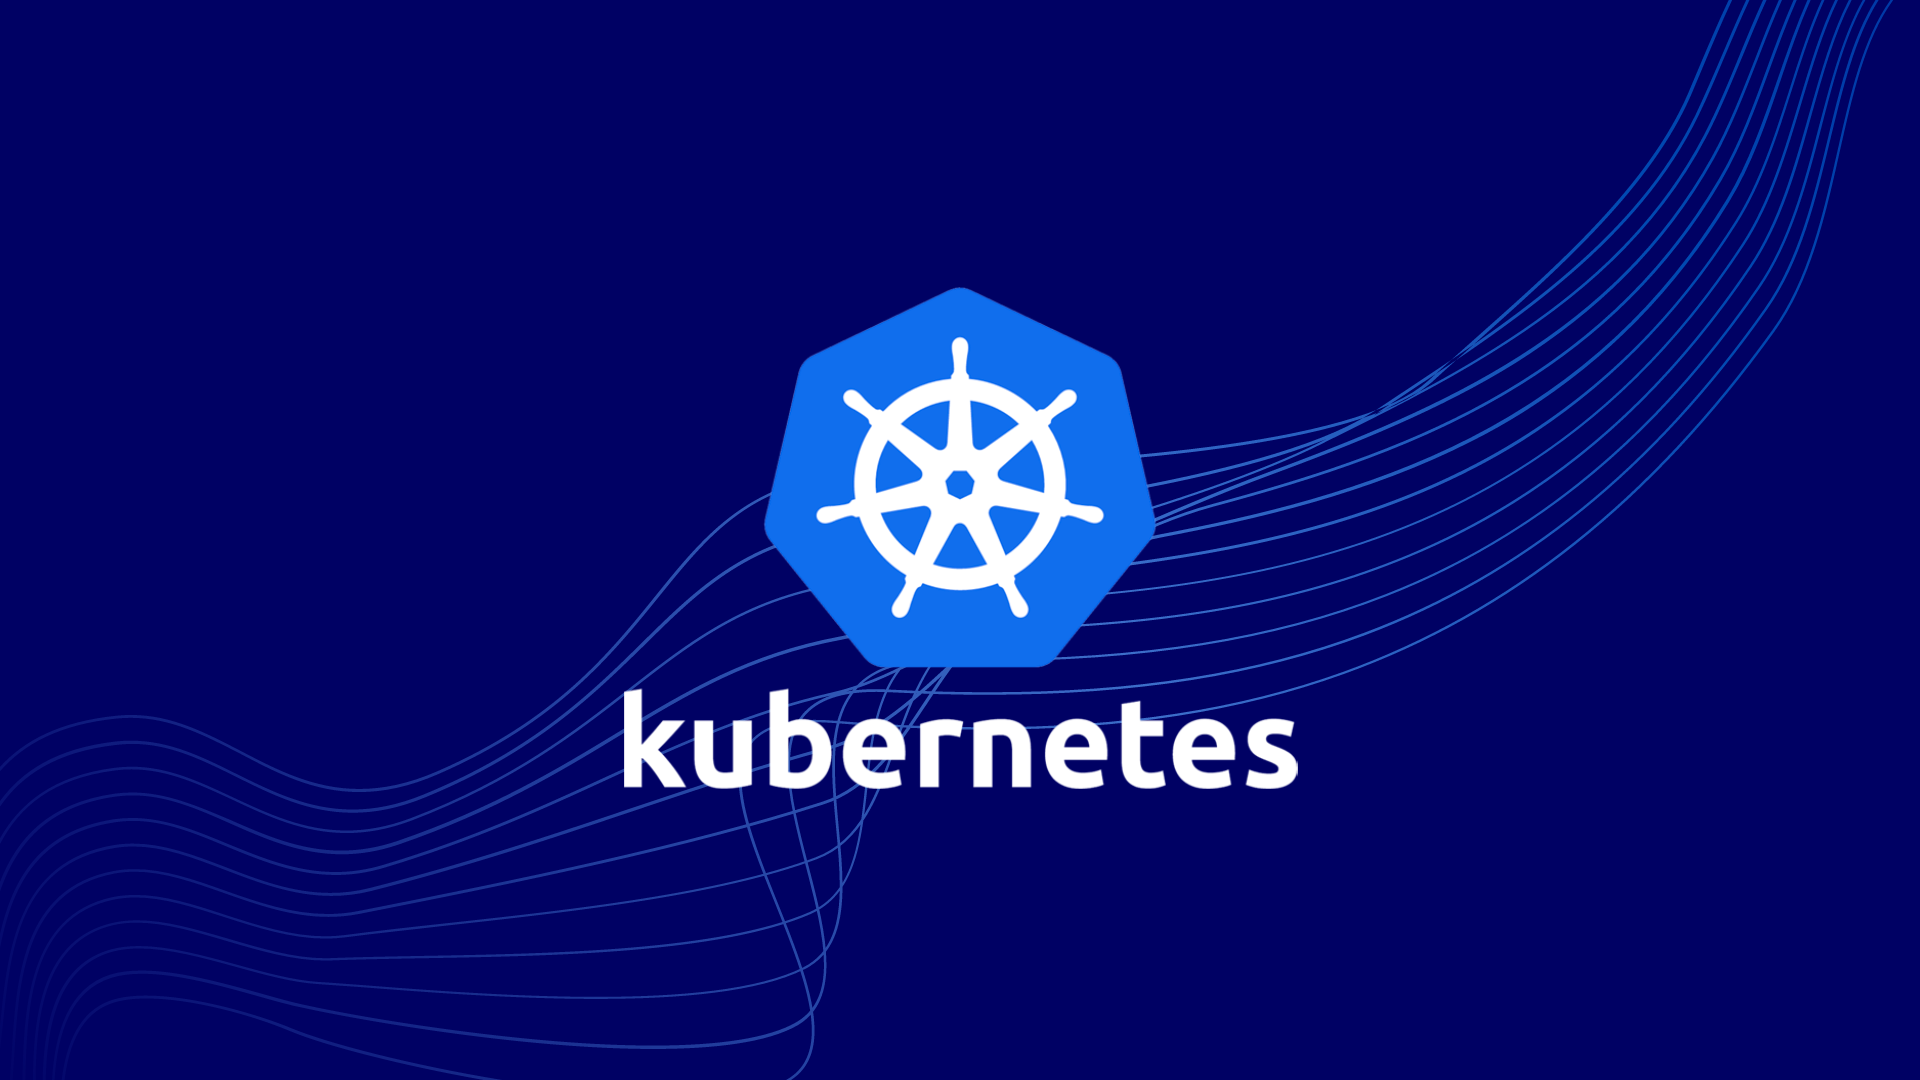 WordPress & Kubernetes: Getting Started with Kubernetes